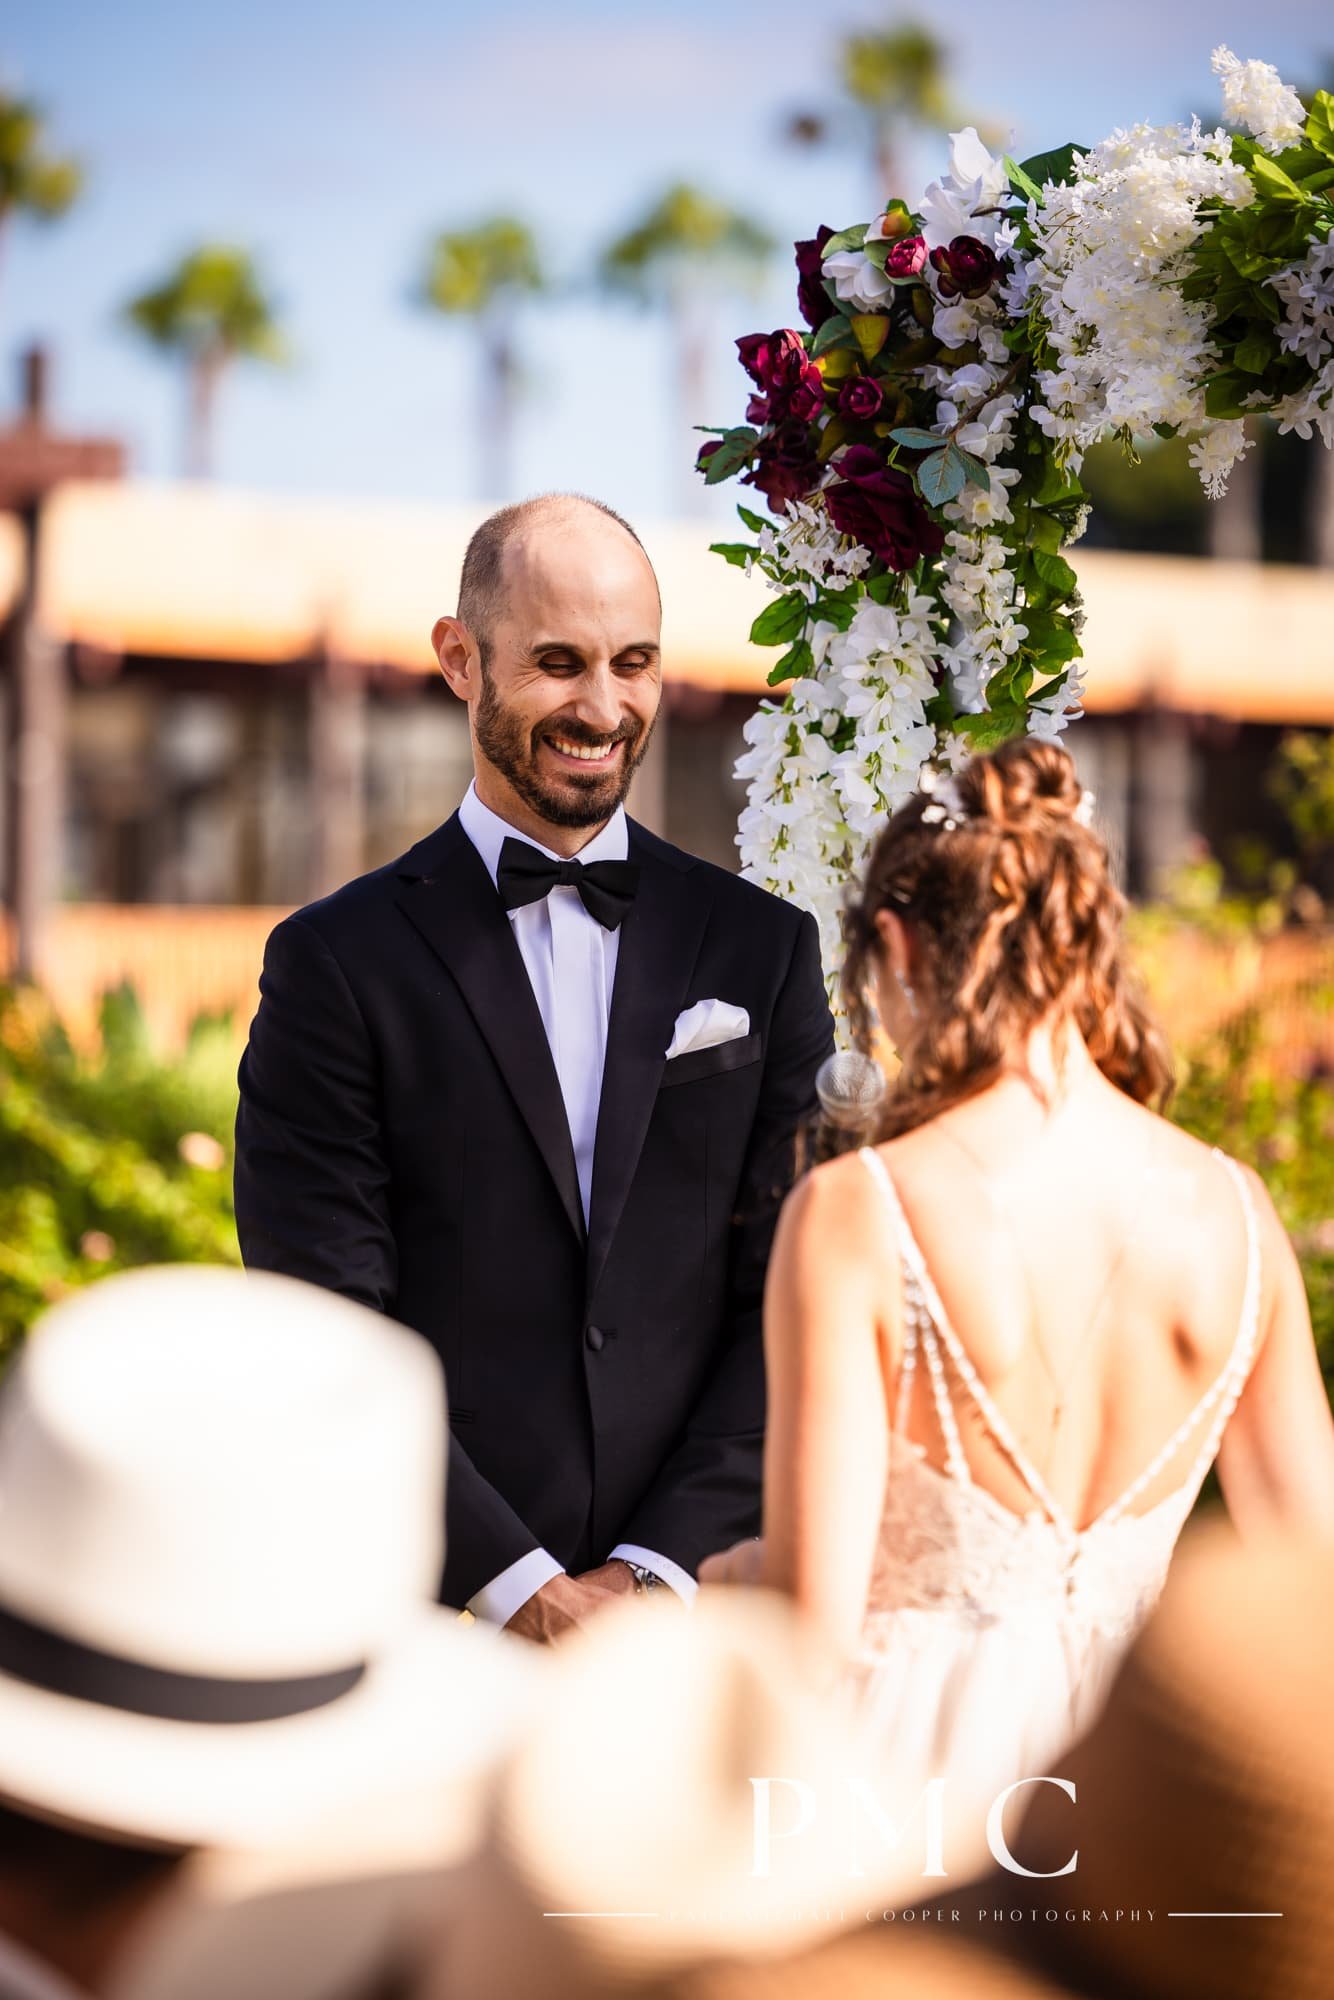 Paradise Point Resort & Spa - Summer Mission Bay Wedding - Best San Diego Wedding Photographer-53.jpg